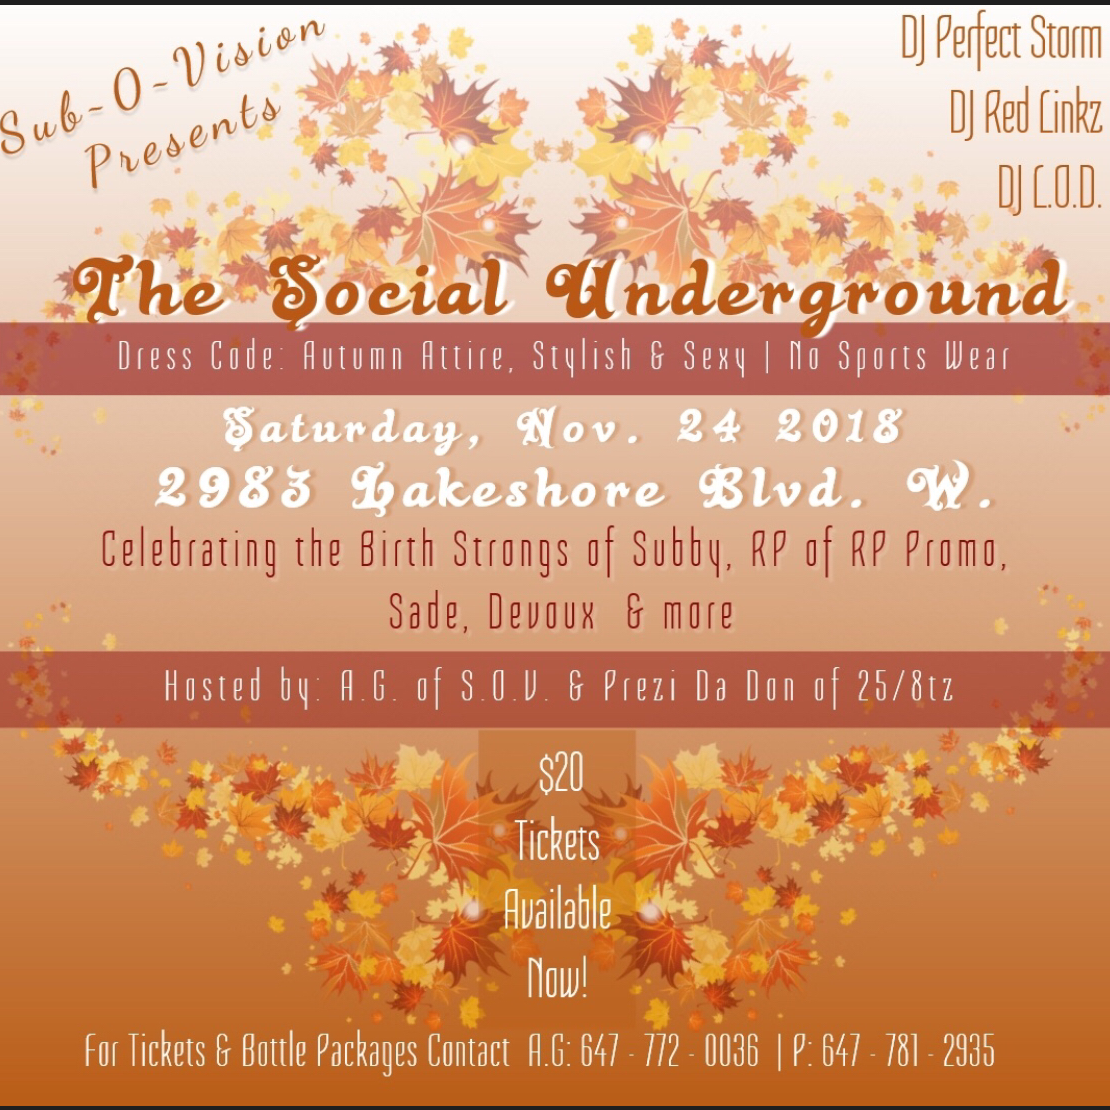 S.O.V Presents The Social Underground